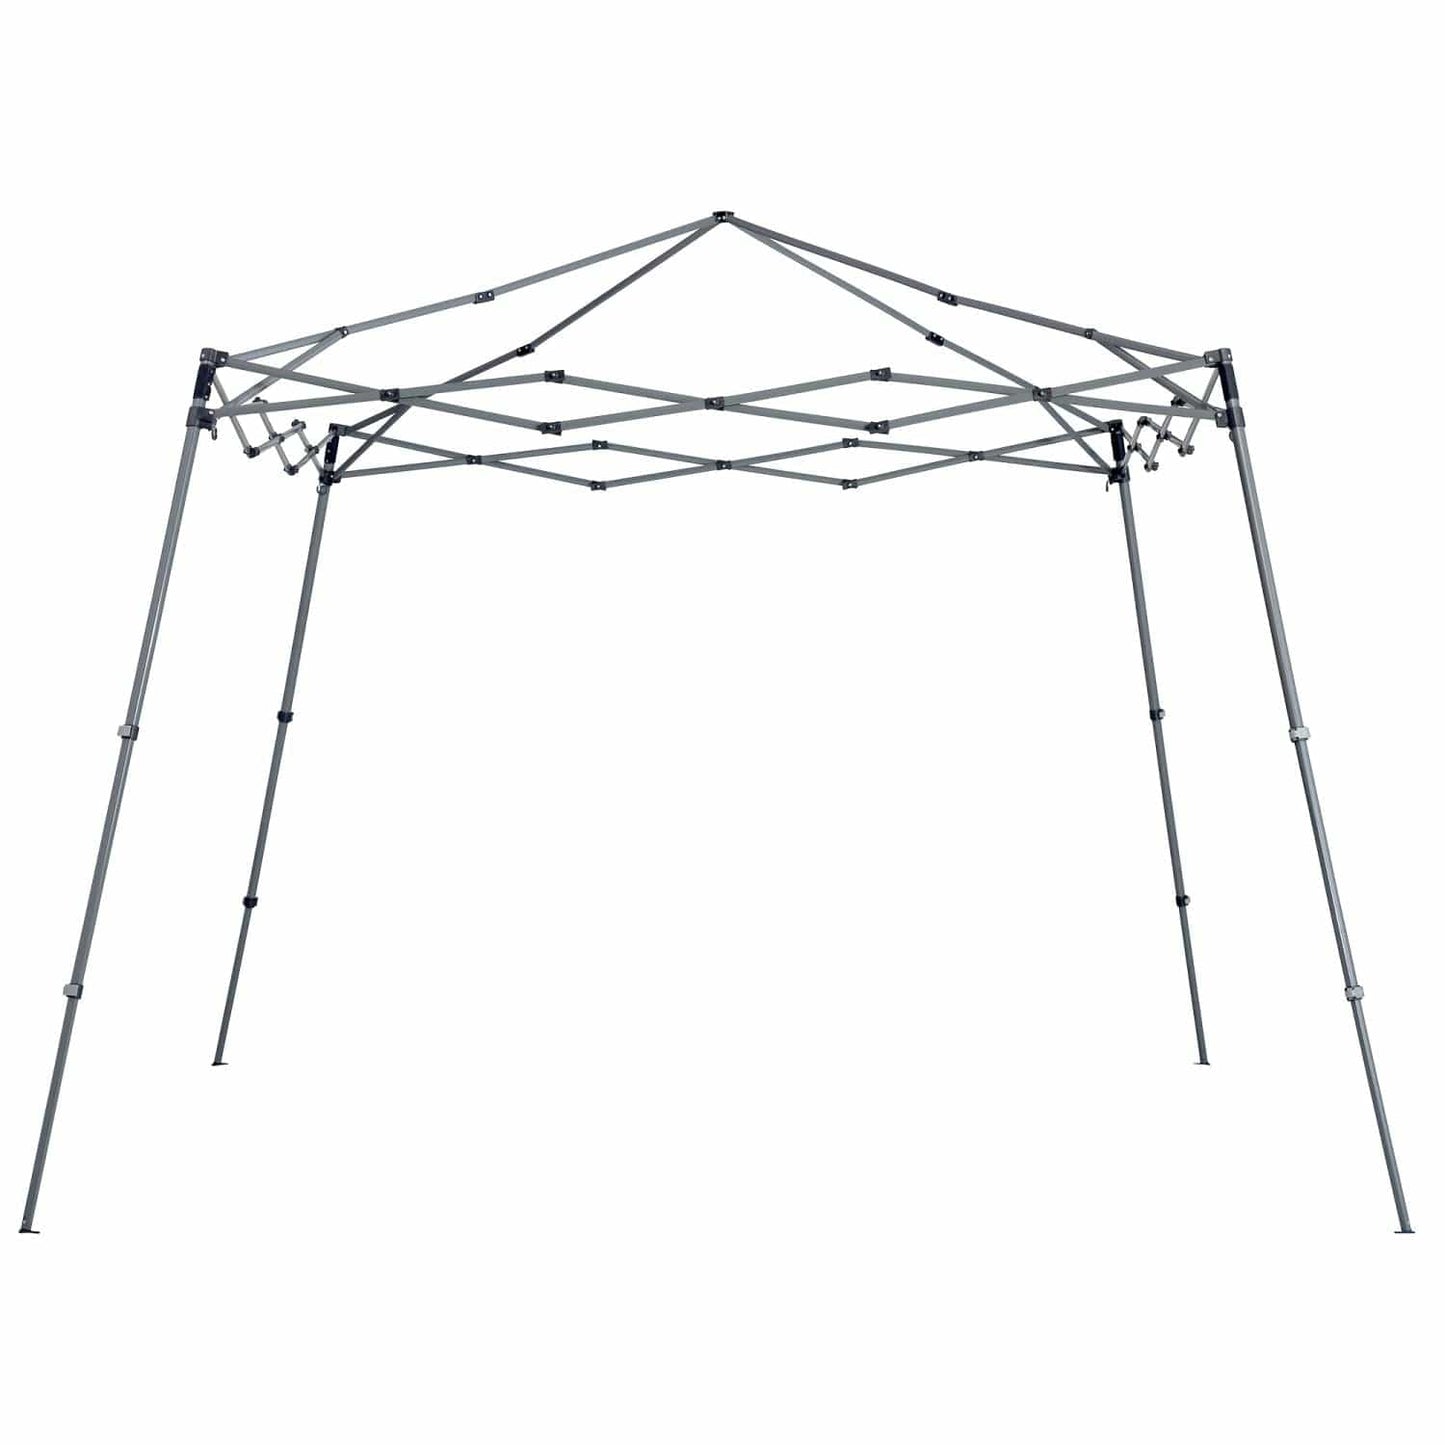 Quik Shade Pop Up Canopies Quik Shade | Solo Steel 90 11' x 11' Slant Leg Canopy - Khaki 167542DS